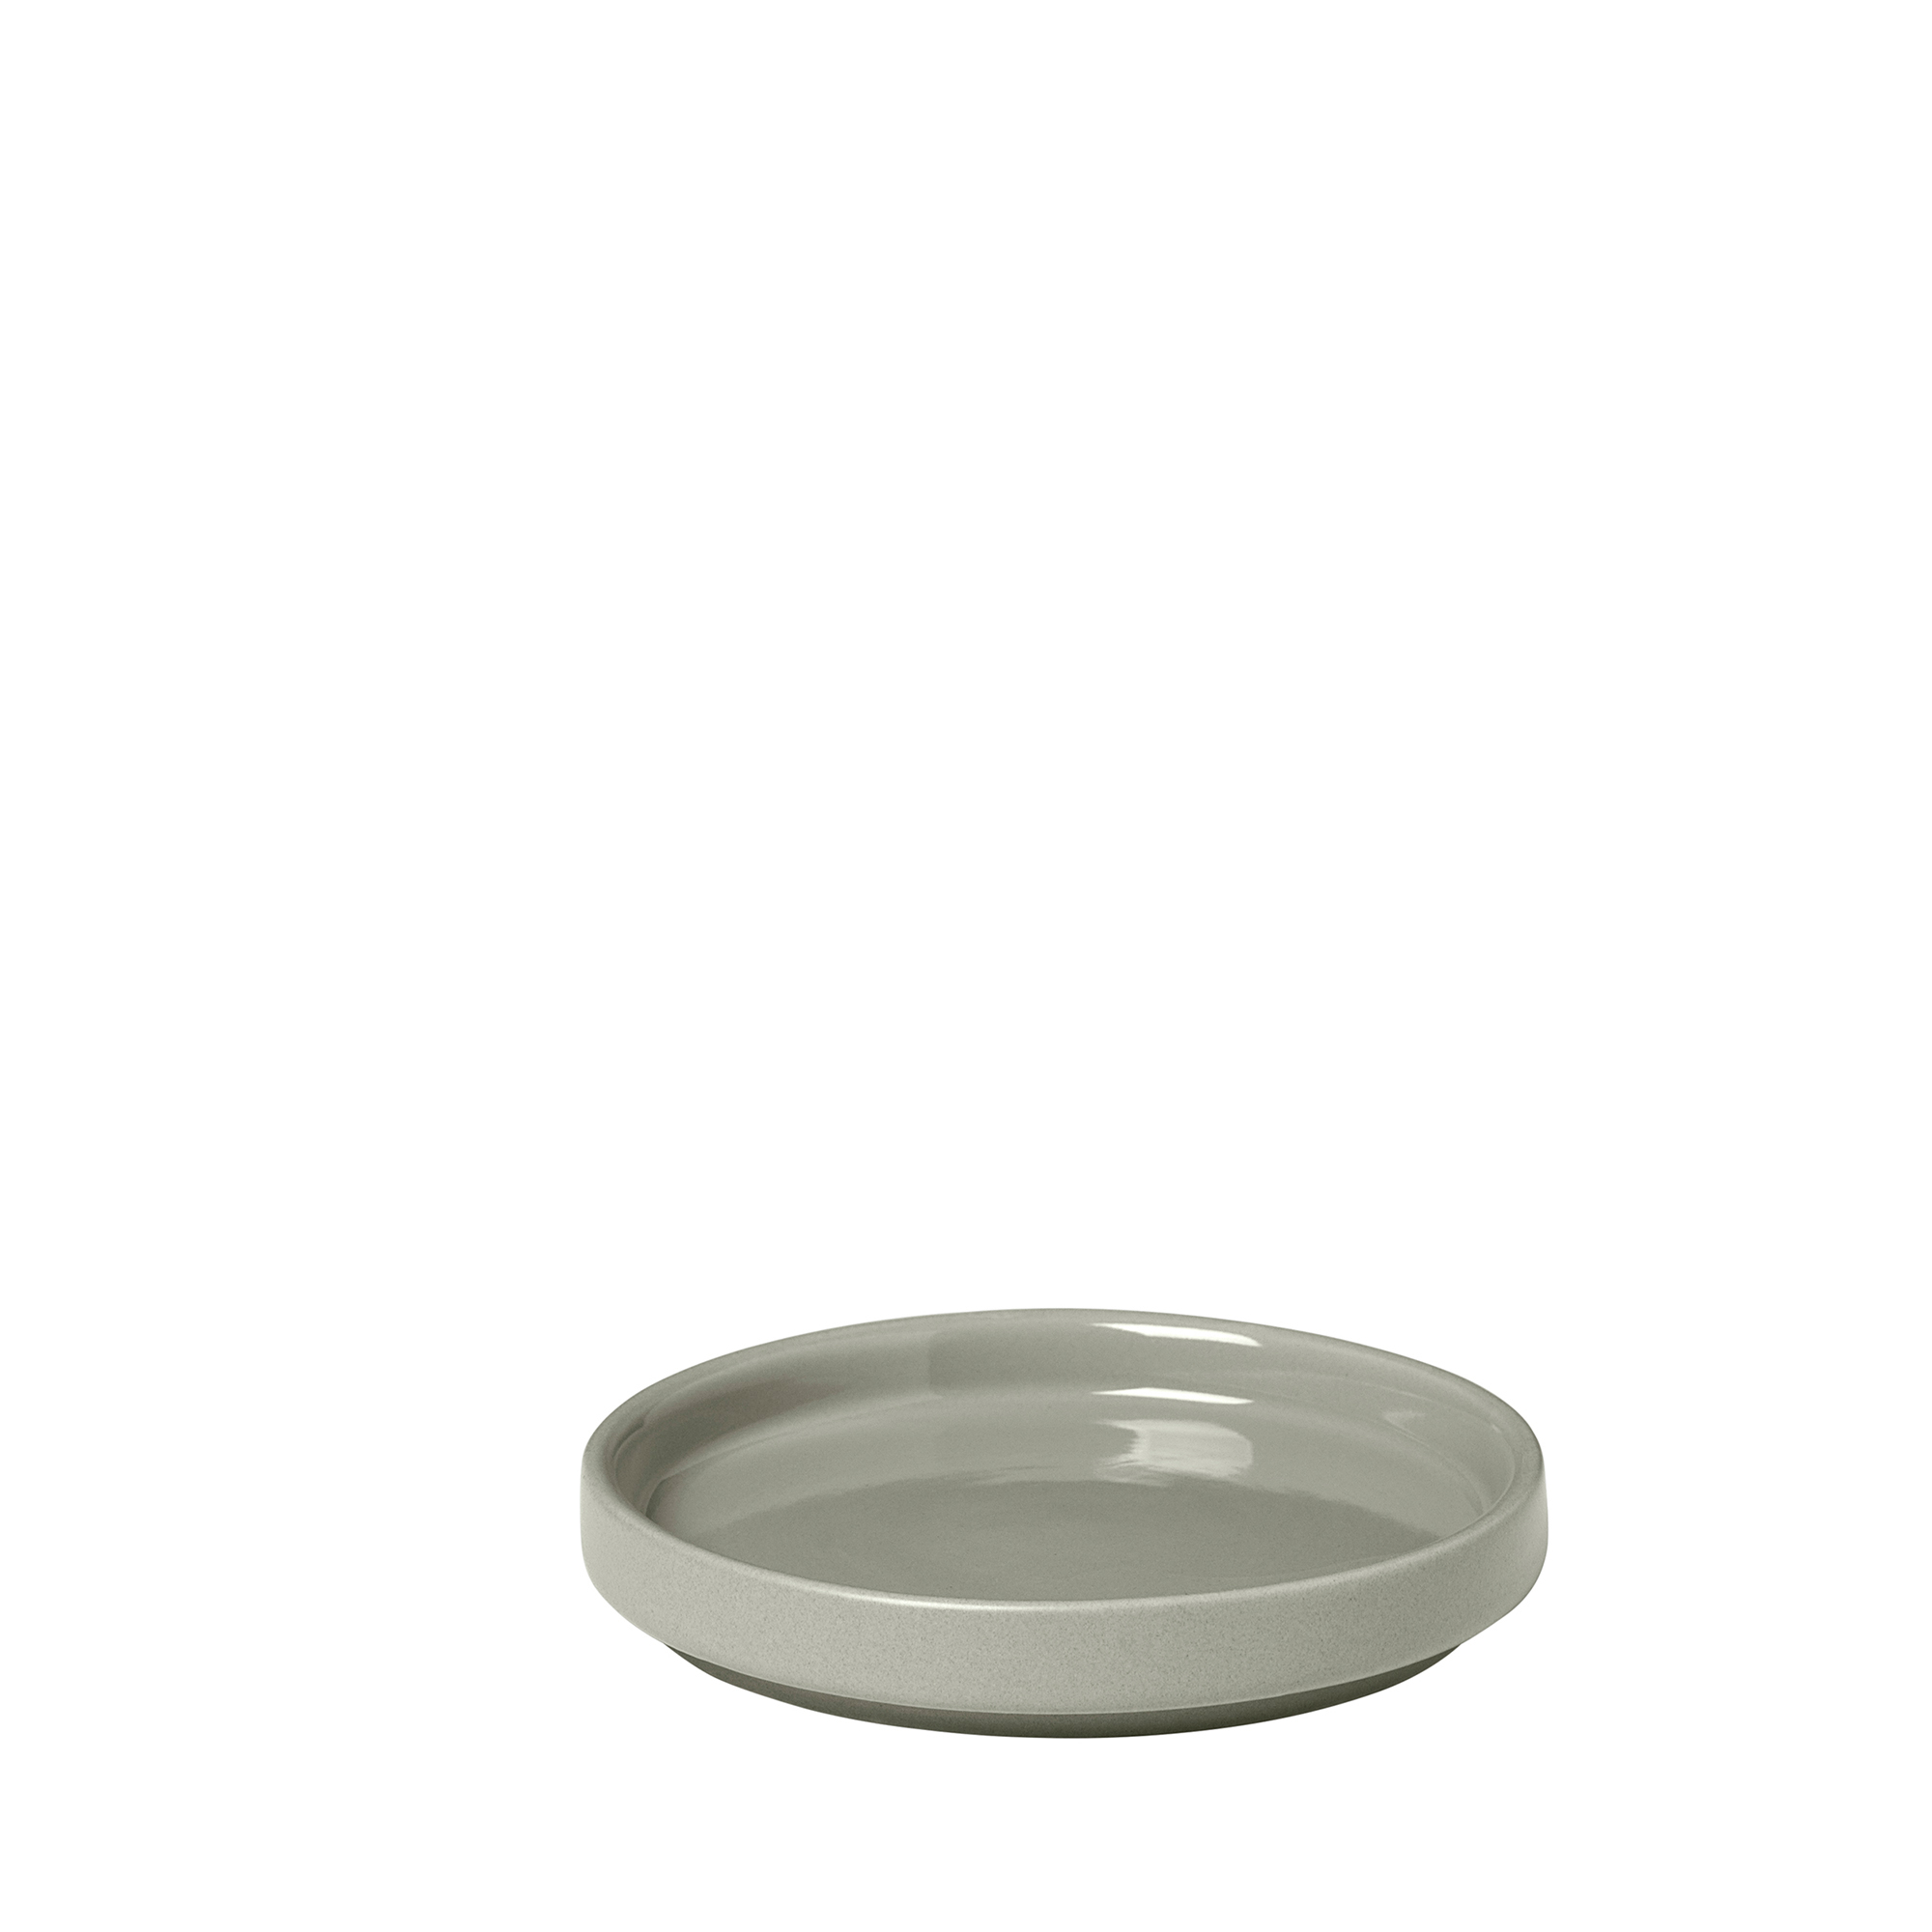 Teller -PILAR- Mirage Gray, Ø 10 cm. Material: Keramik. Von Blomus.